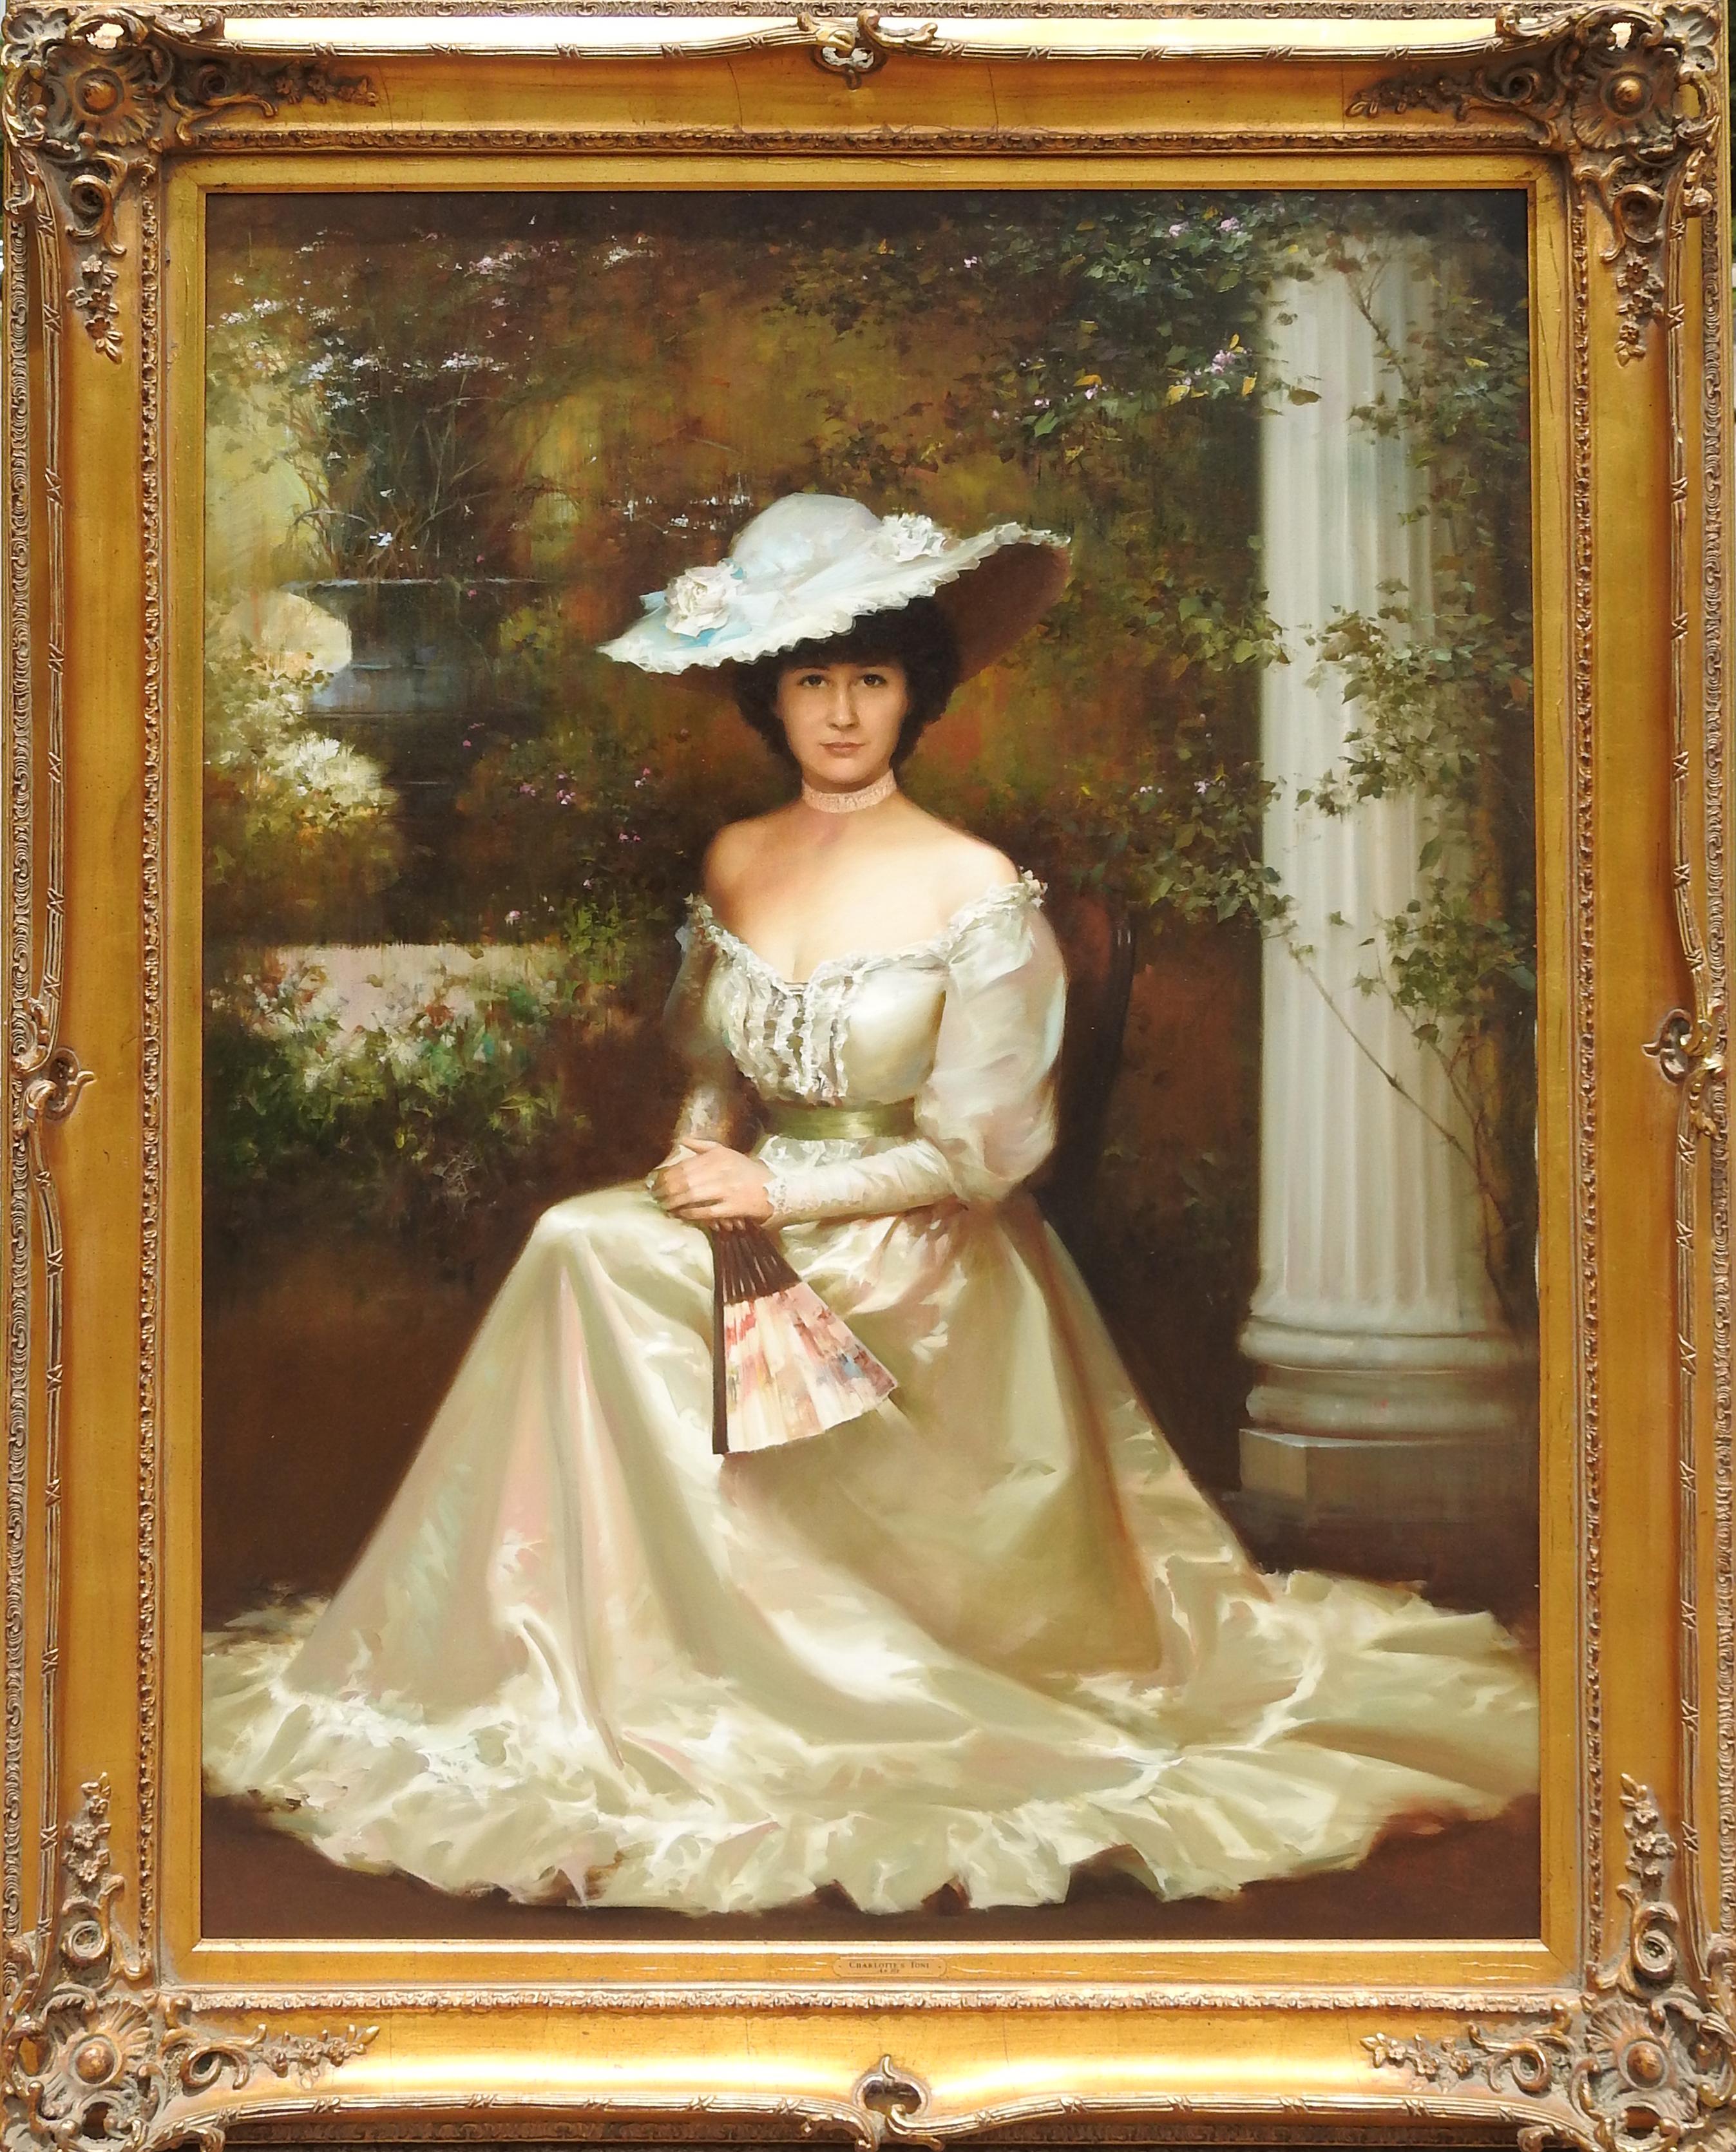 "Charlotte's Toni", An He, Realistic Portrait, Original Oil on Canvas, 48x36 in.